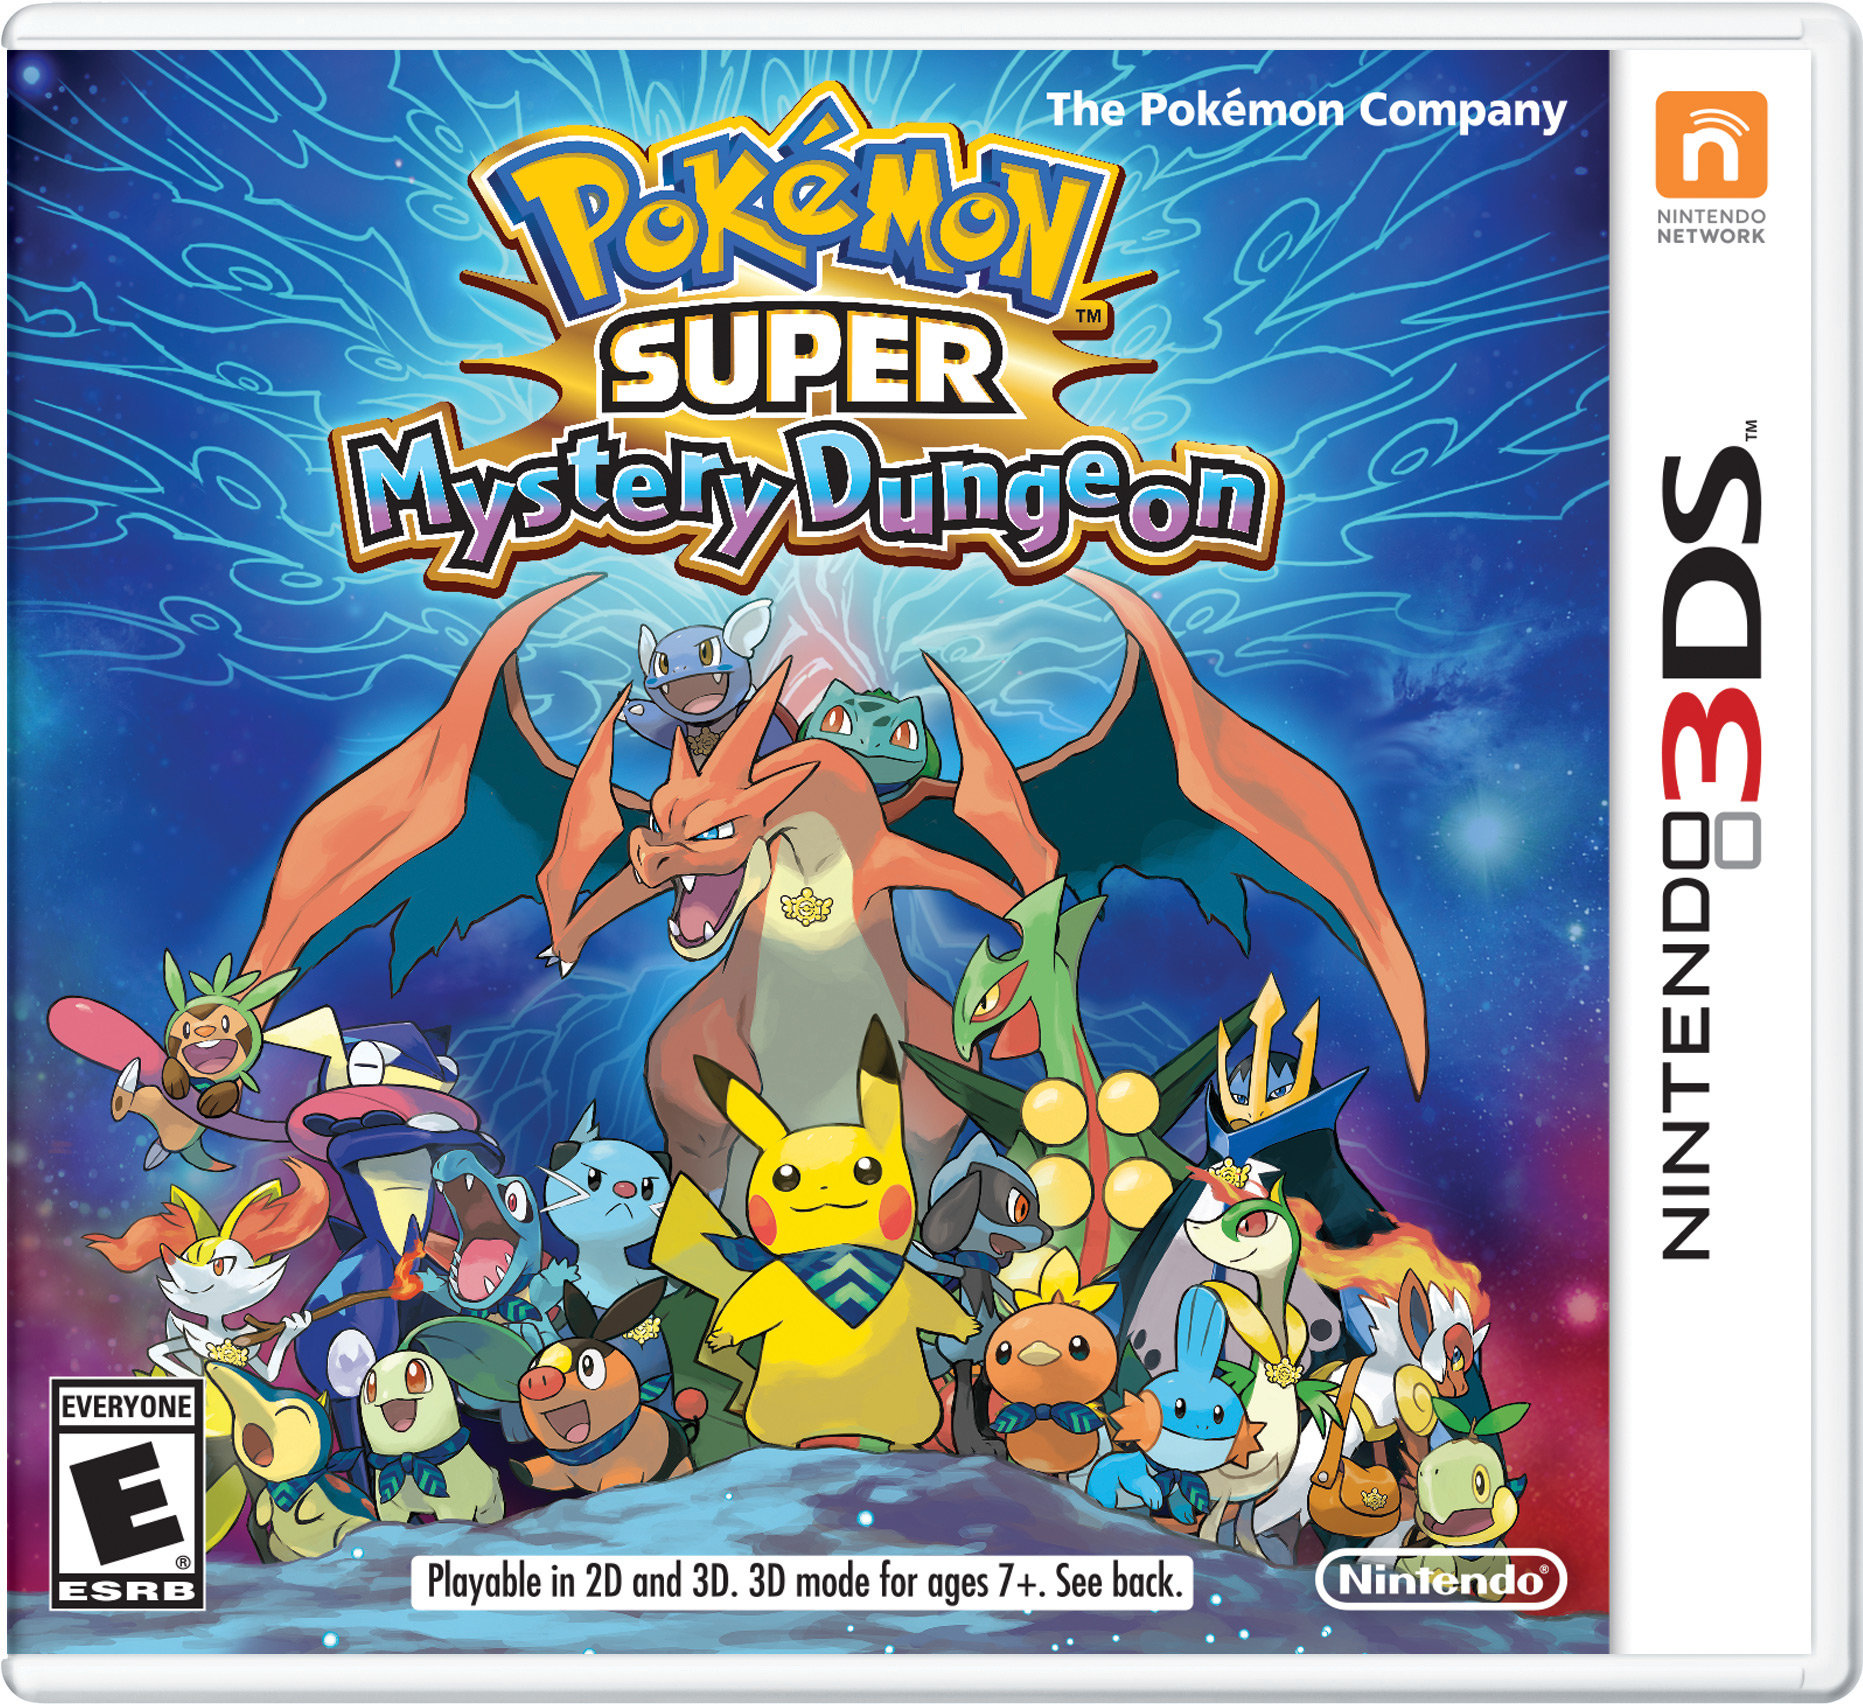 Pokémon Mystery Dungeon Cover Art